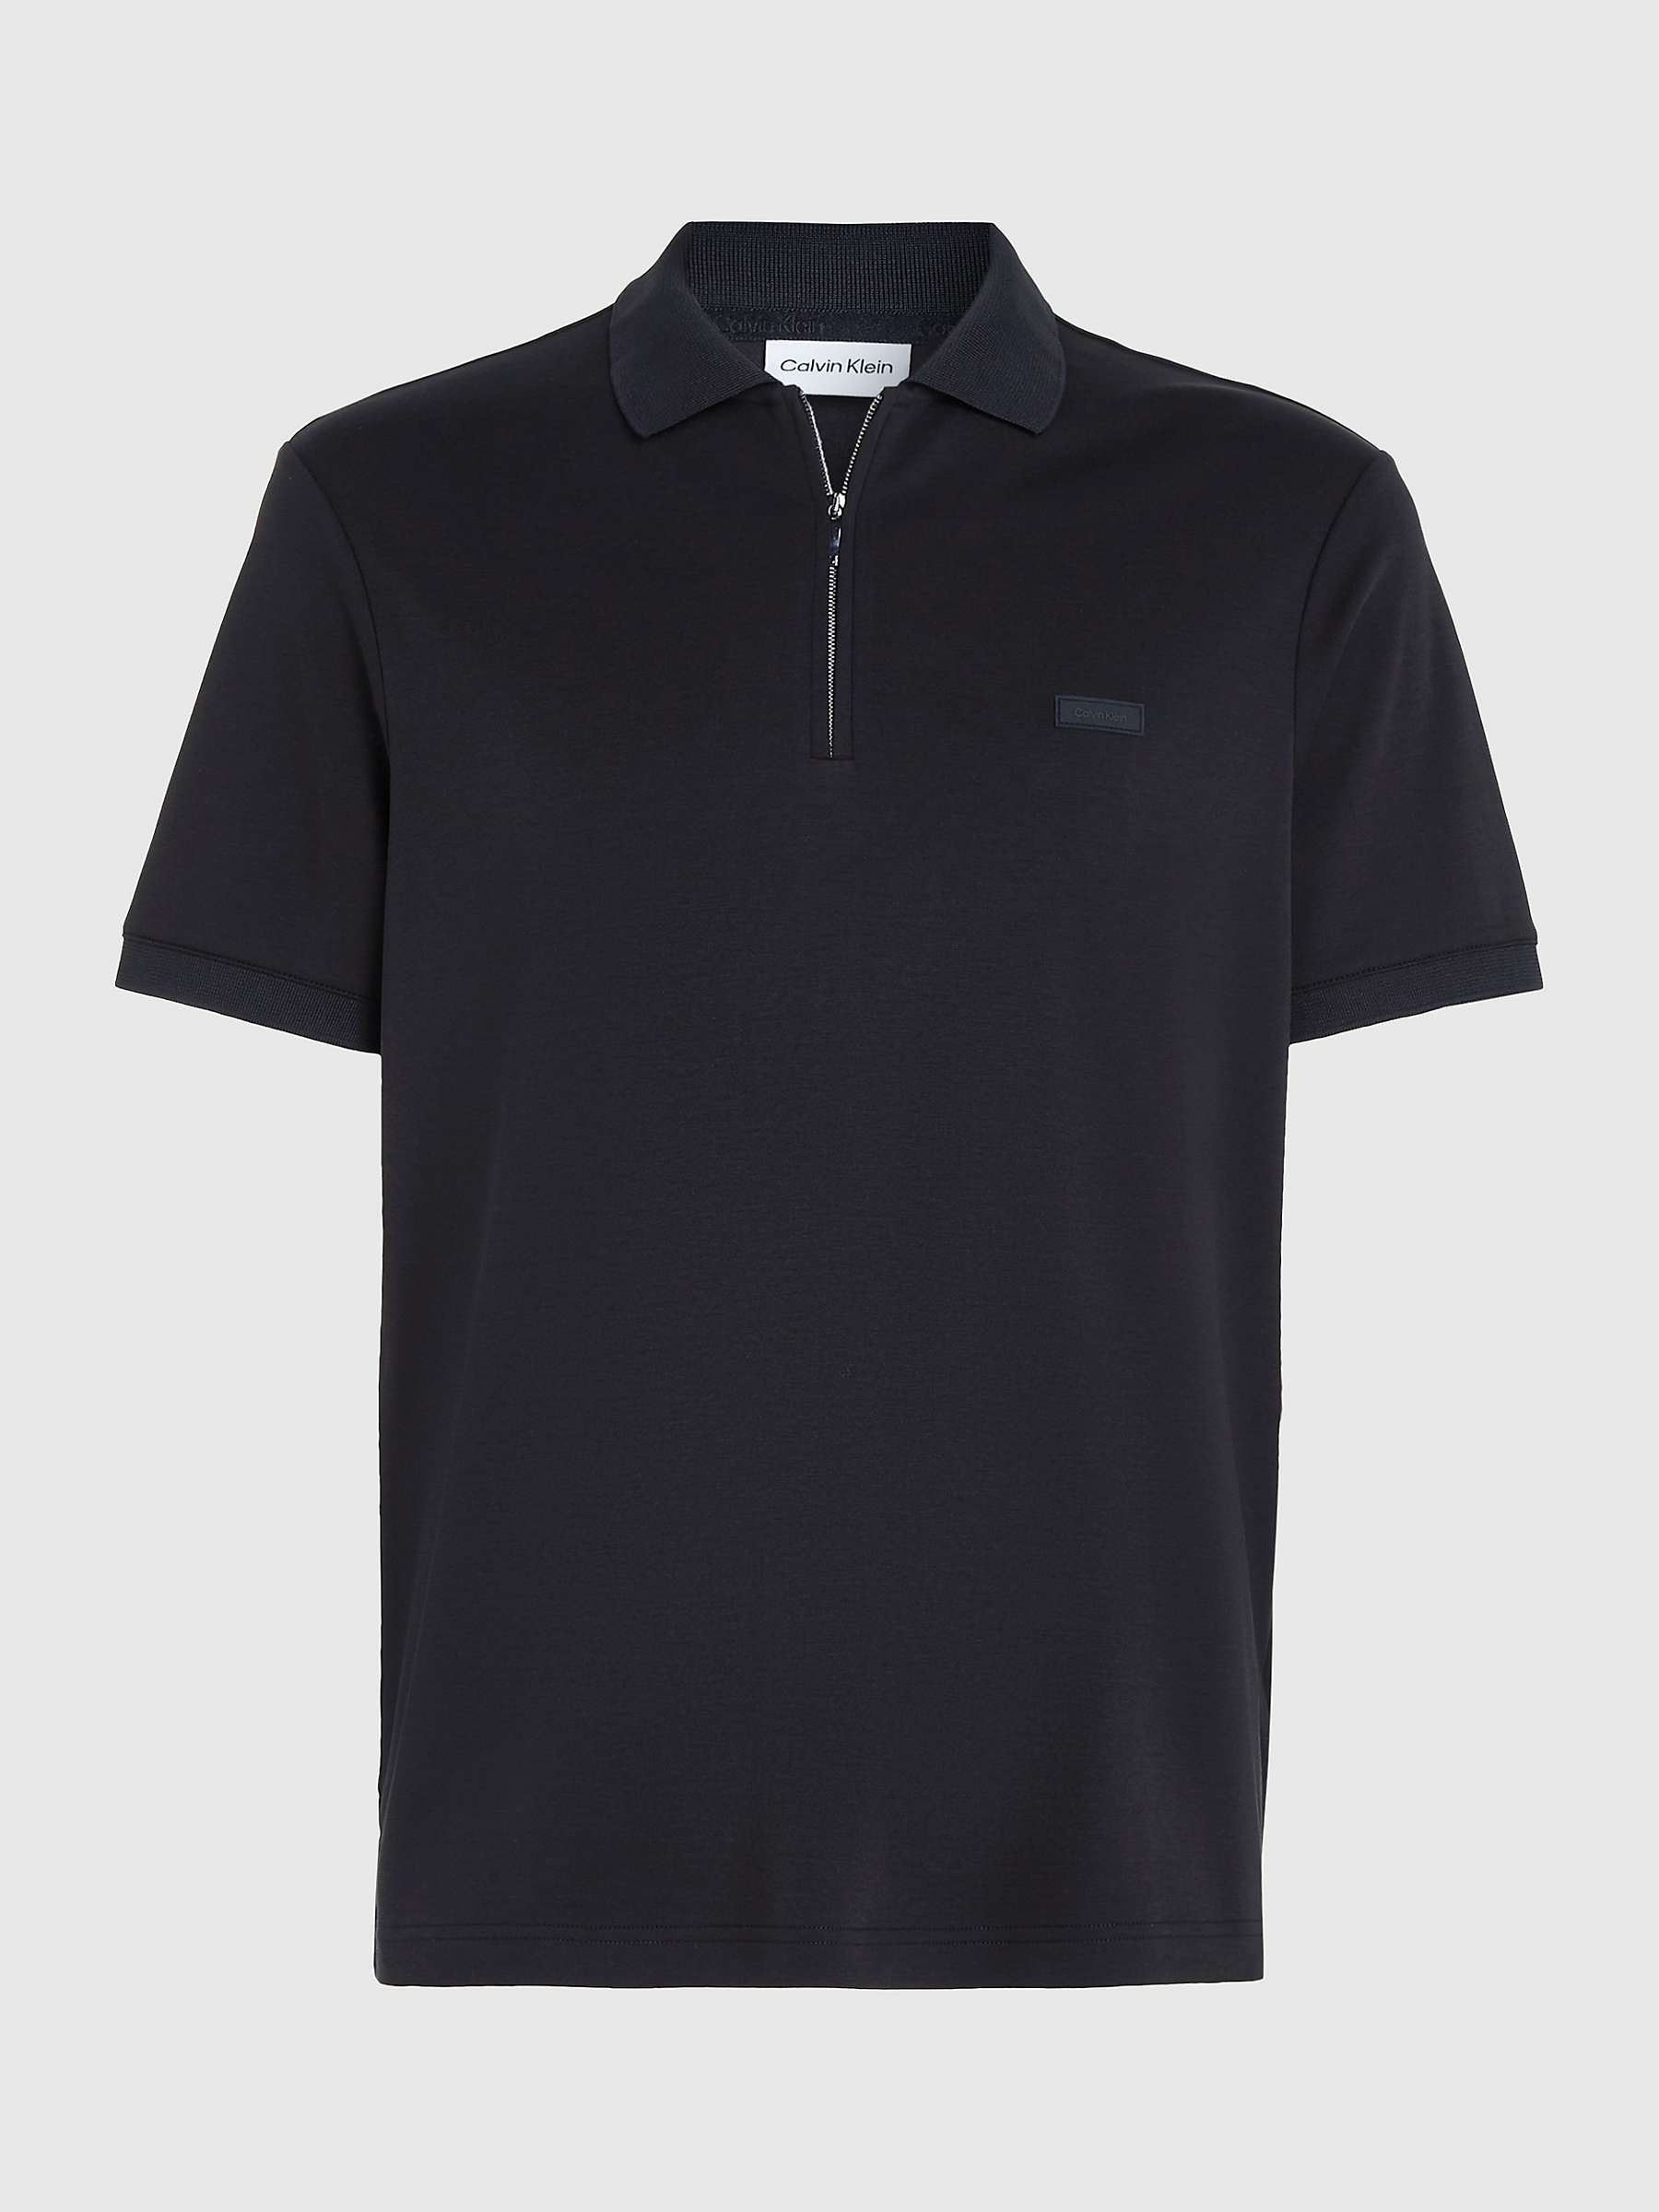 Buy Calvin Klein Zip Neck Organic Cotton Polo Shirt, Ck Black Online at johnlewis.com